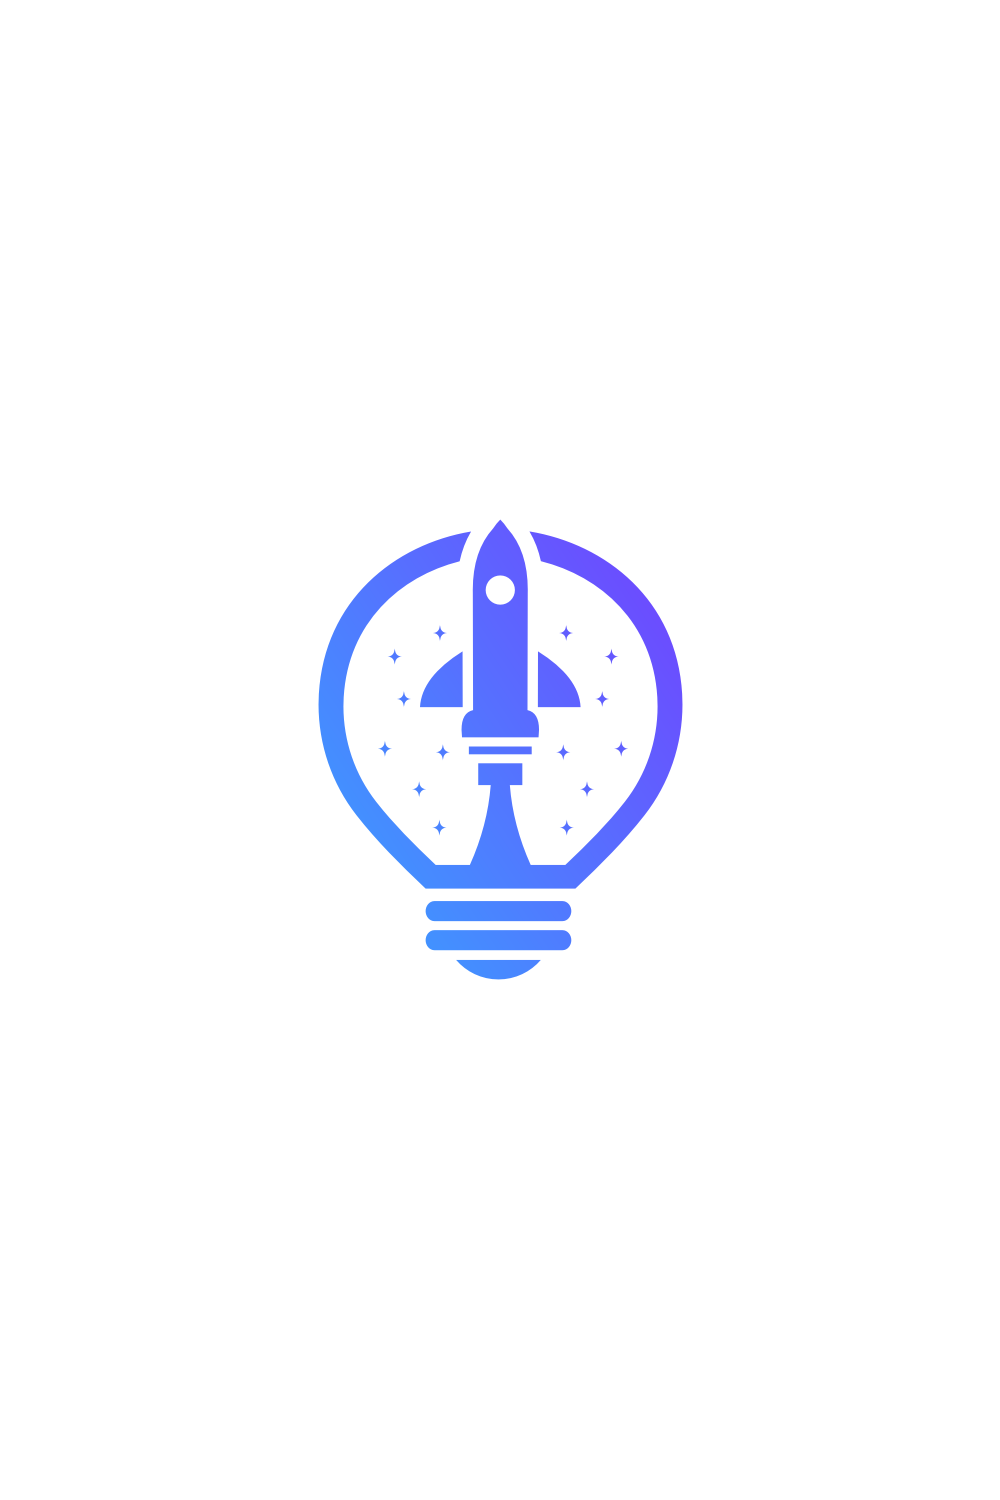 Rocket Idea Launch Logo Vector Template Pinterest preview.